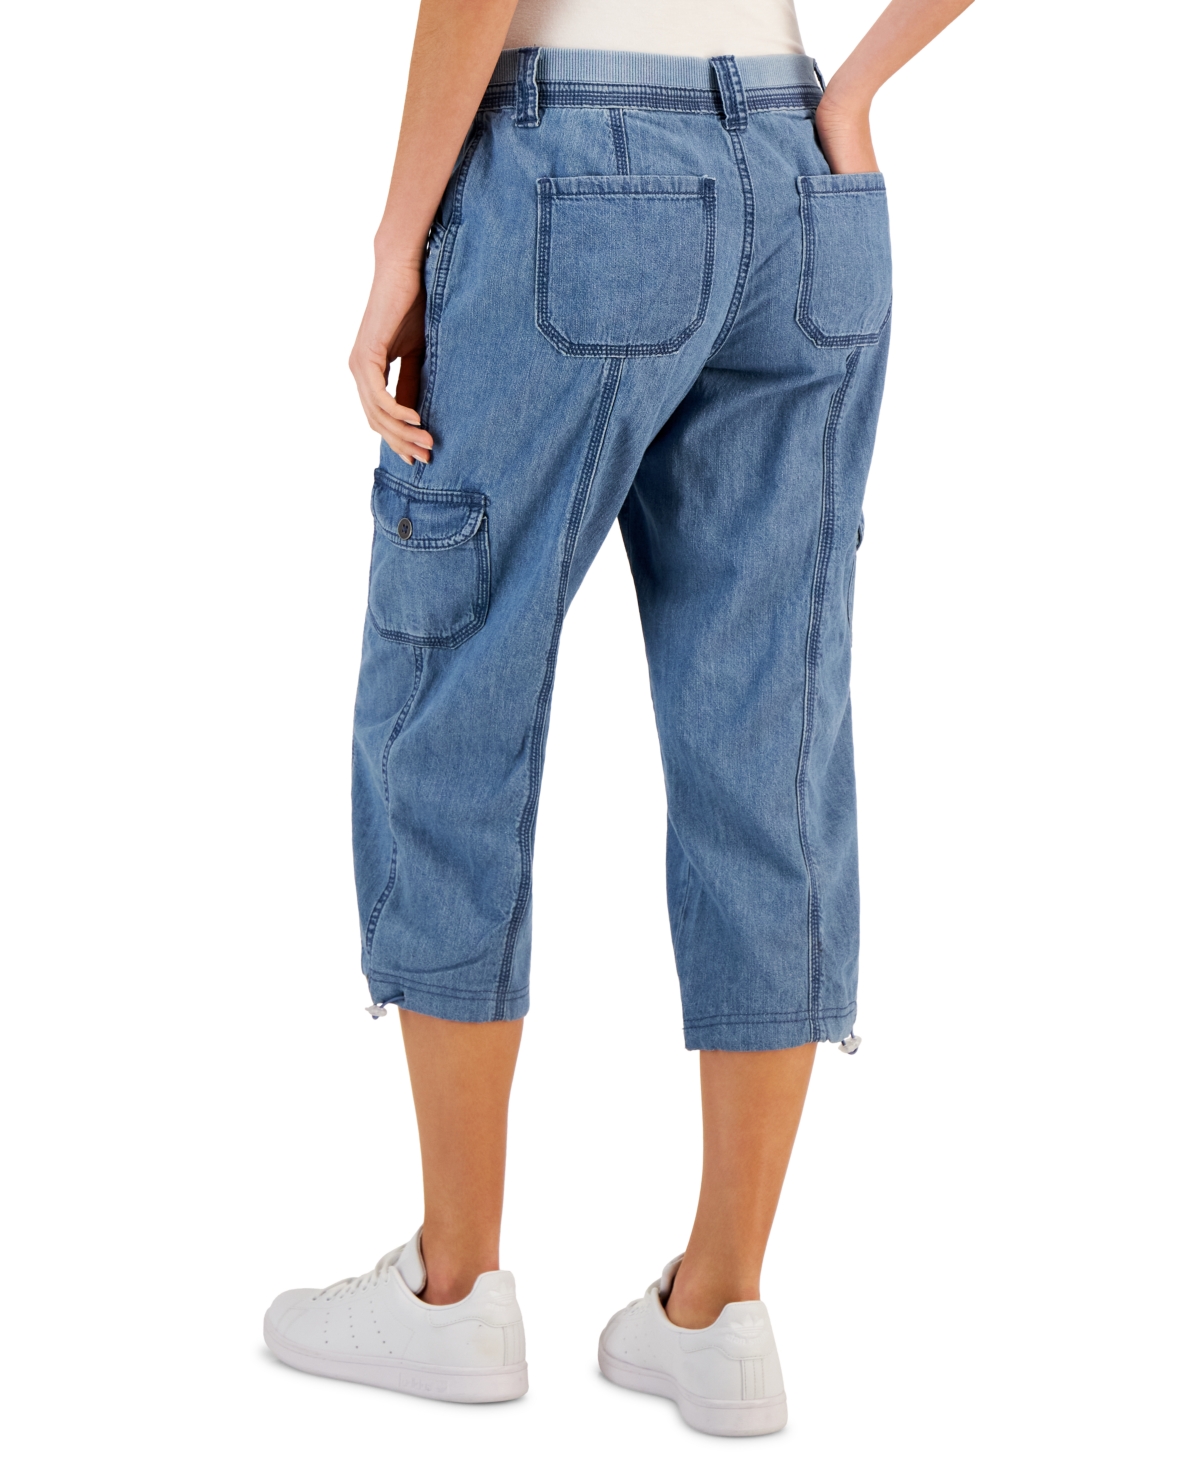 Style & Co Cargo Capri Pants in Regular & Petite Sizes, Created for Macy's  - Macy's